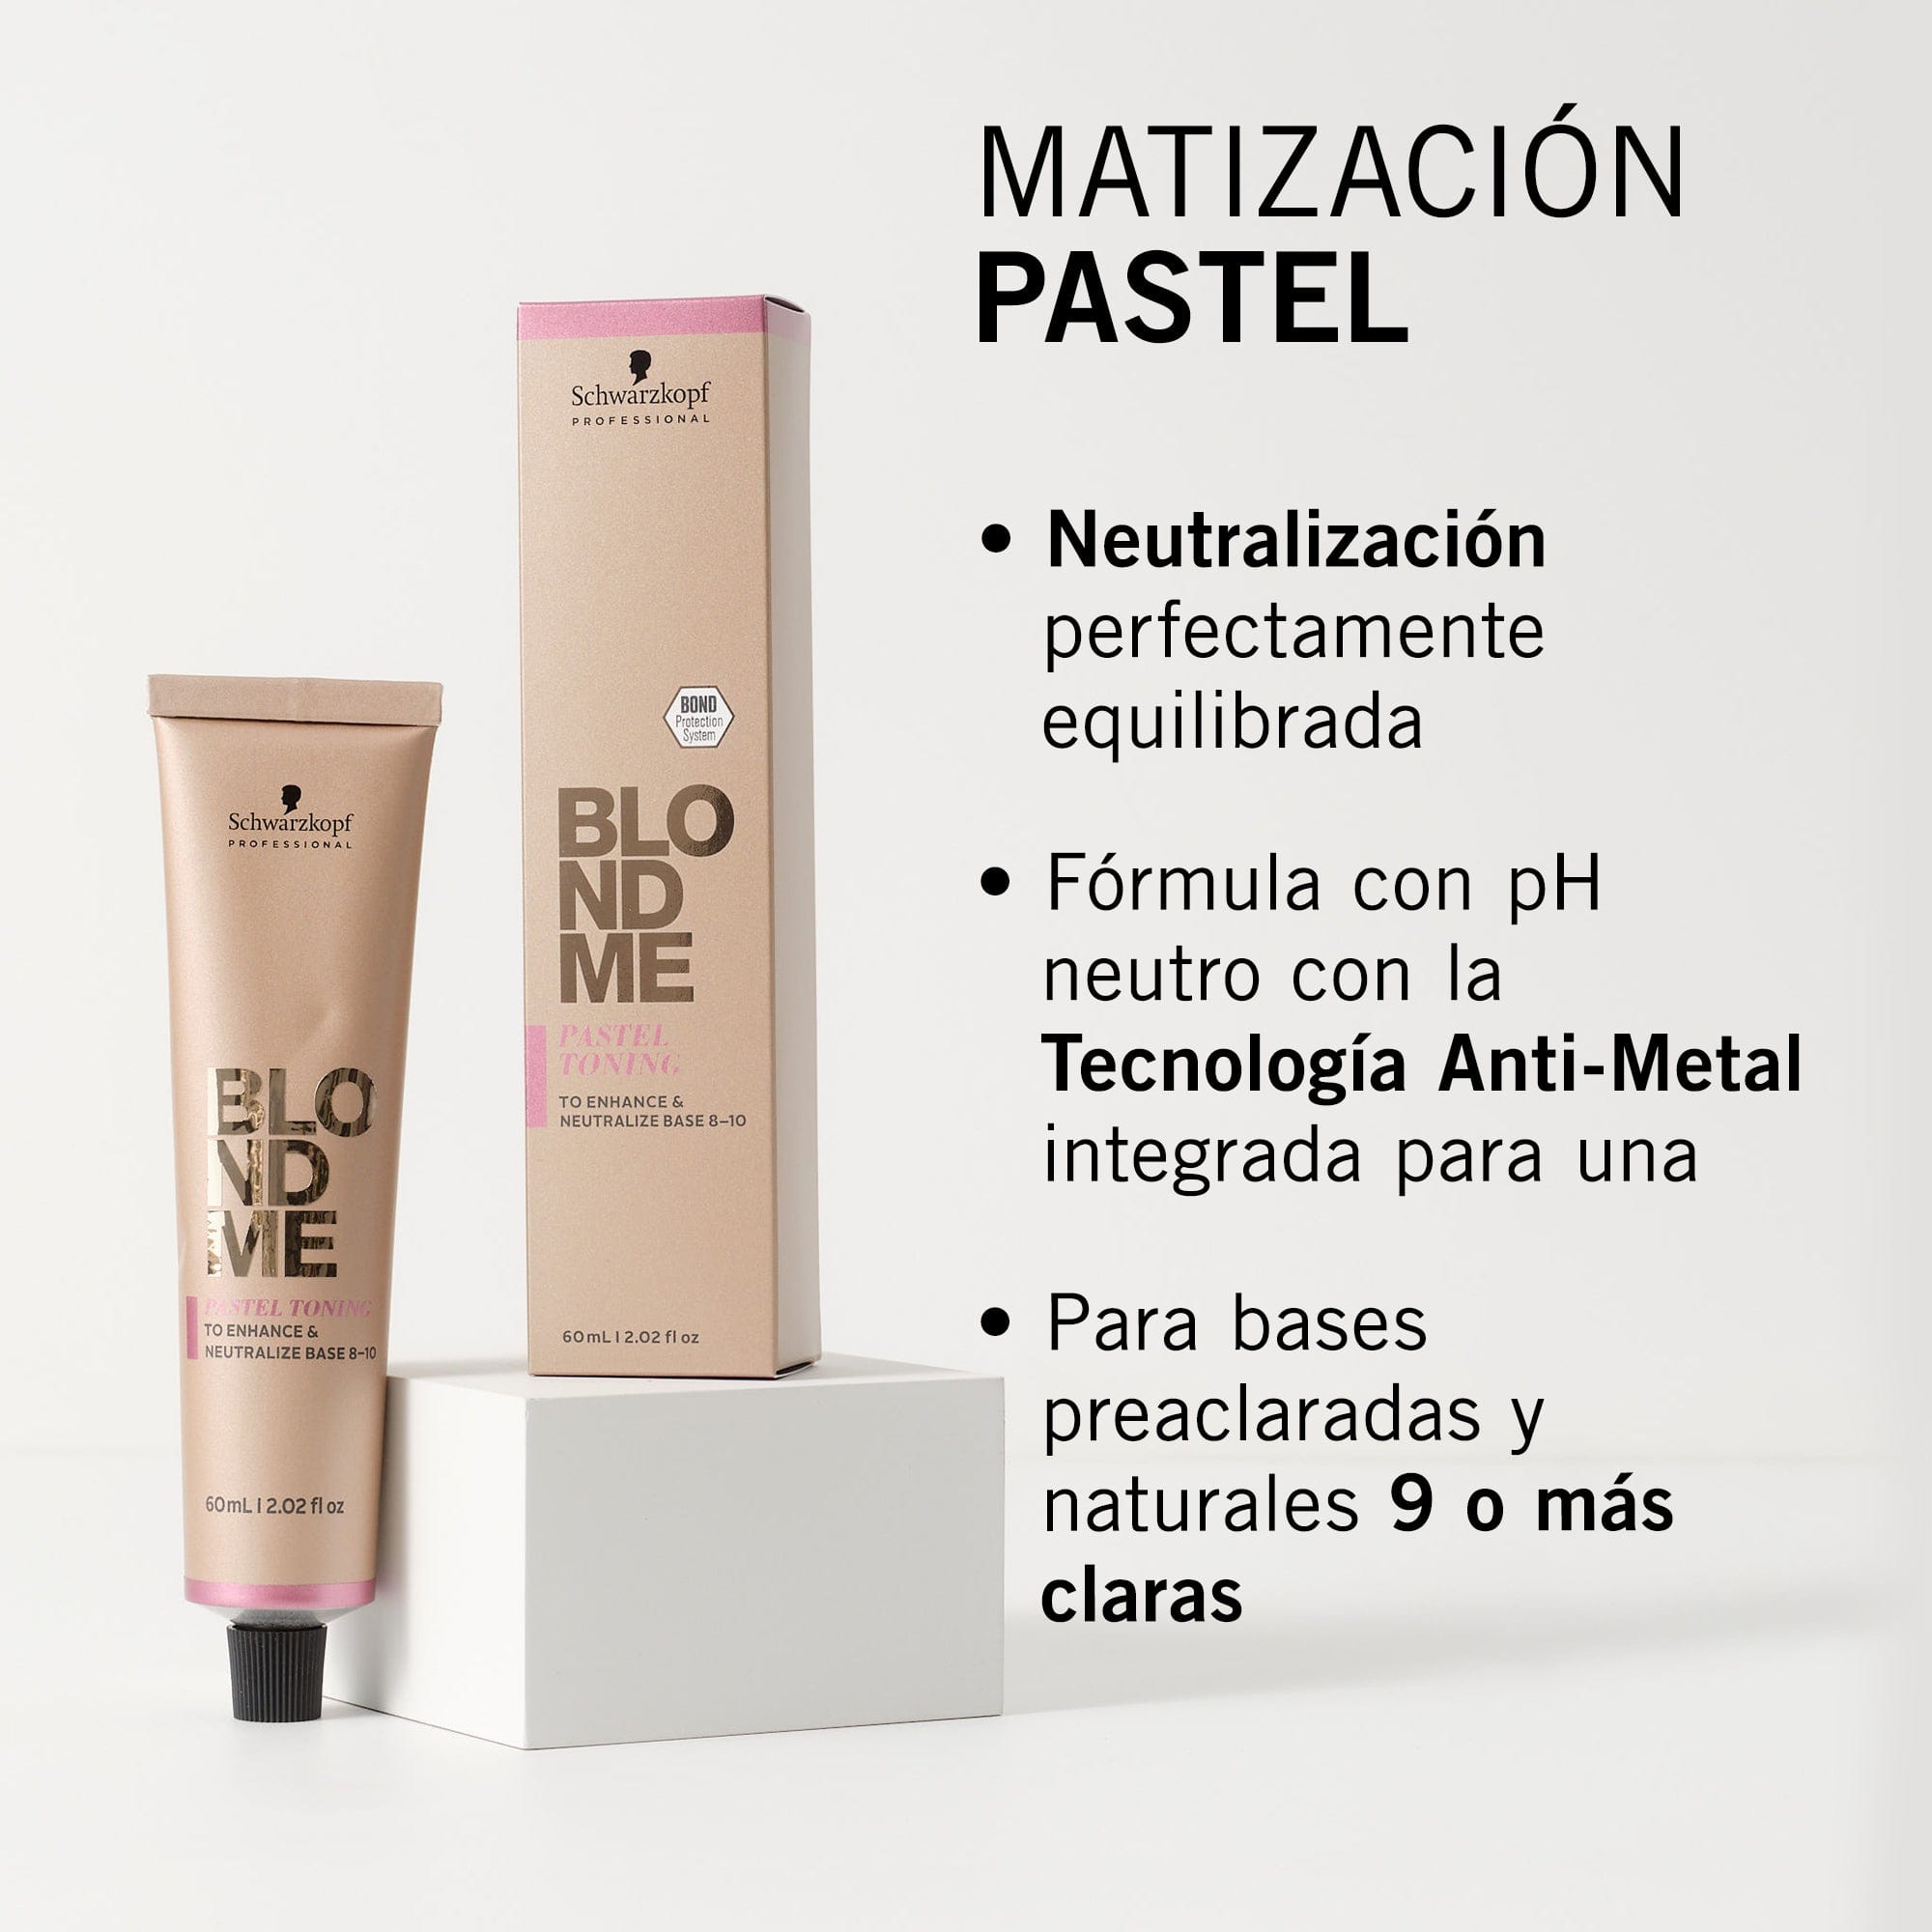 BLONDME Matiz BLONDME Matización Pastel Tono Nítido 60ml Roberta Beauty Club Tienda Online Productos de Peluqueria